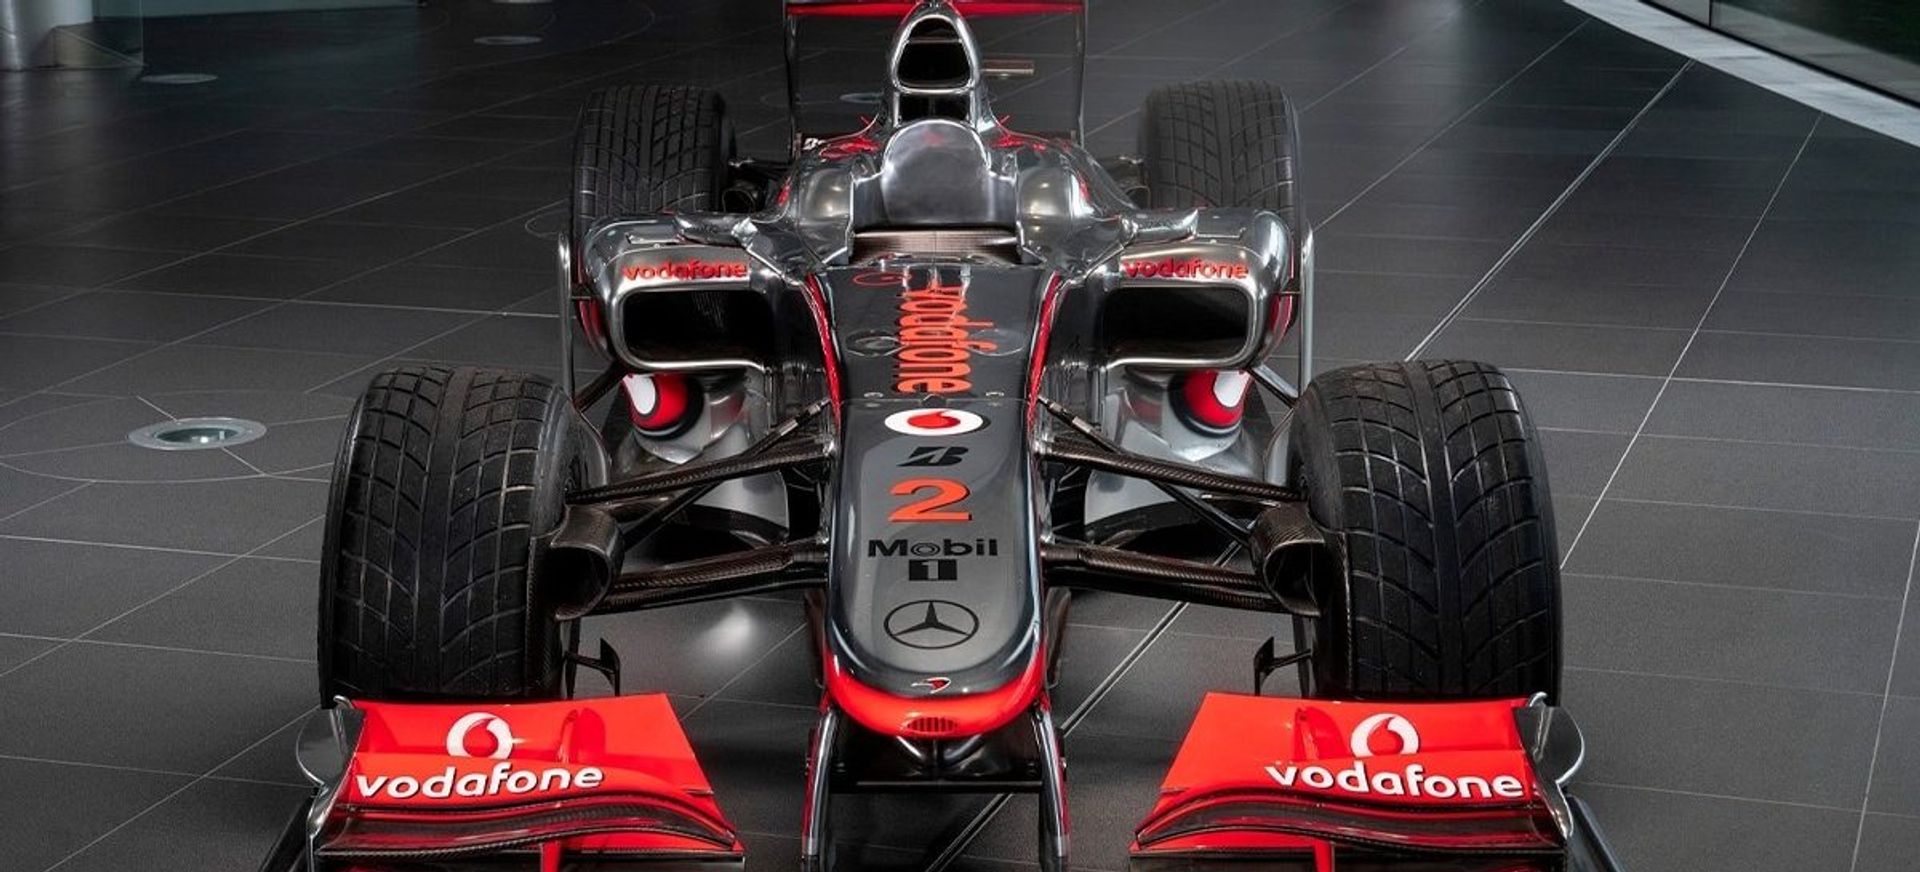 Formule 1-auto van Lewis Hamilton